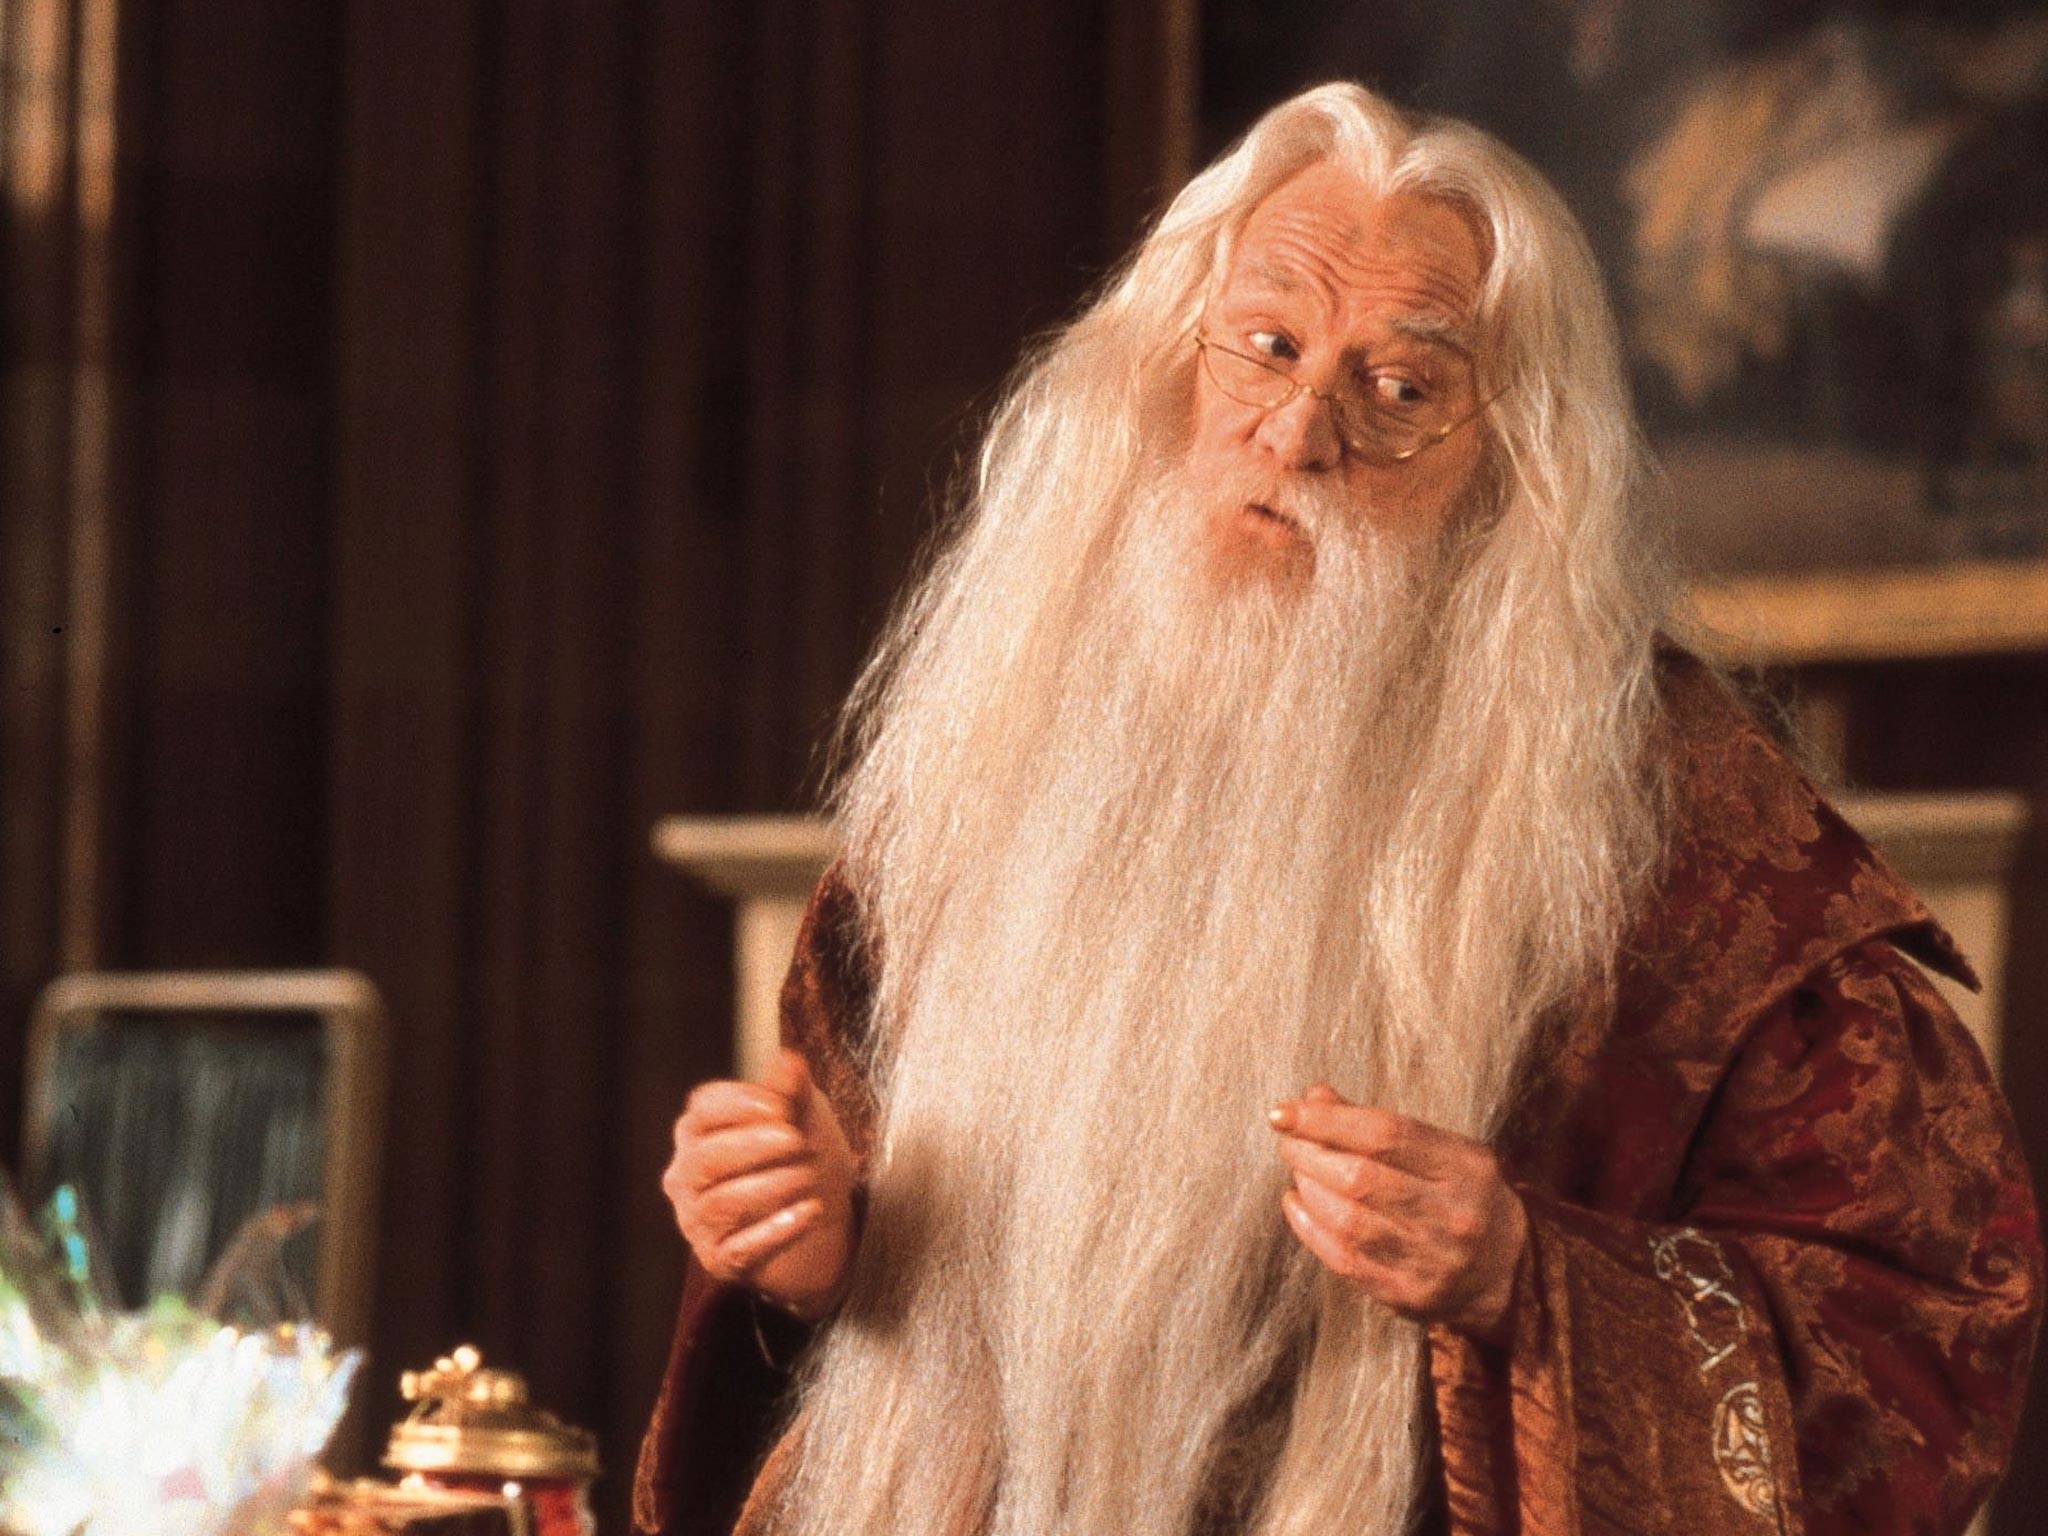 dumbledore tapete,bart,veranstaltung,ältere,performance